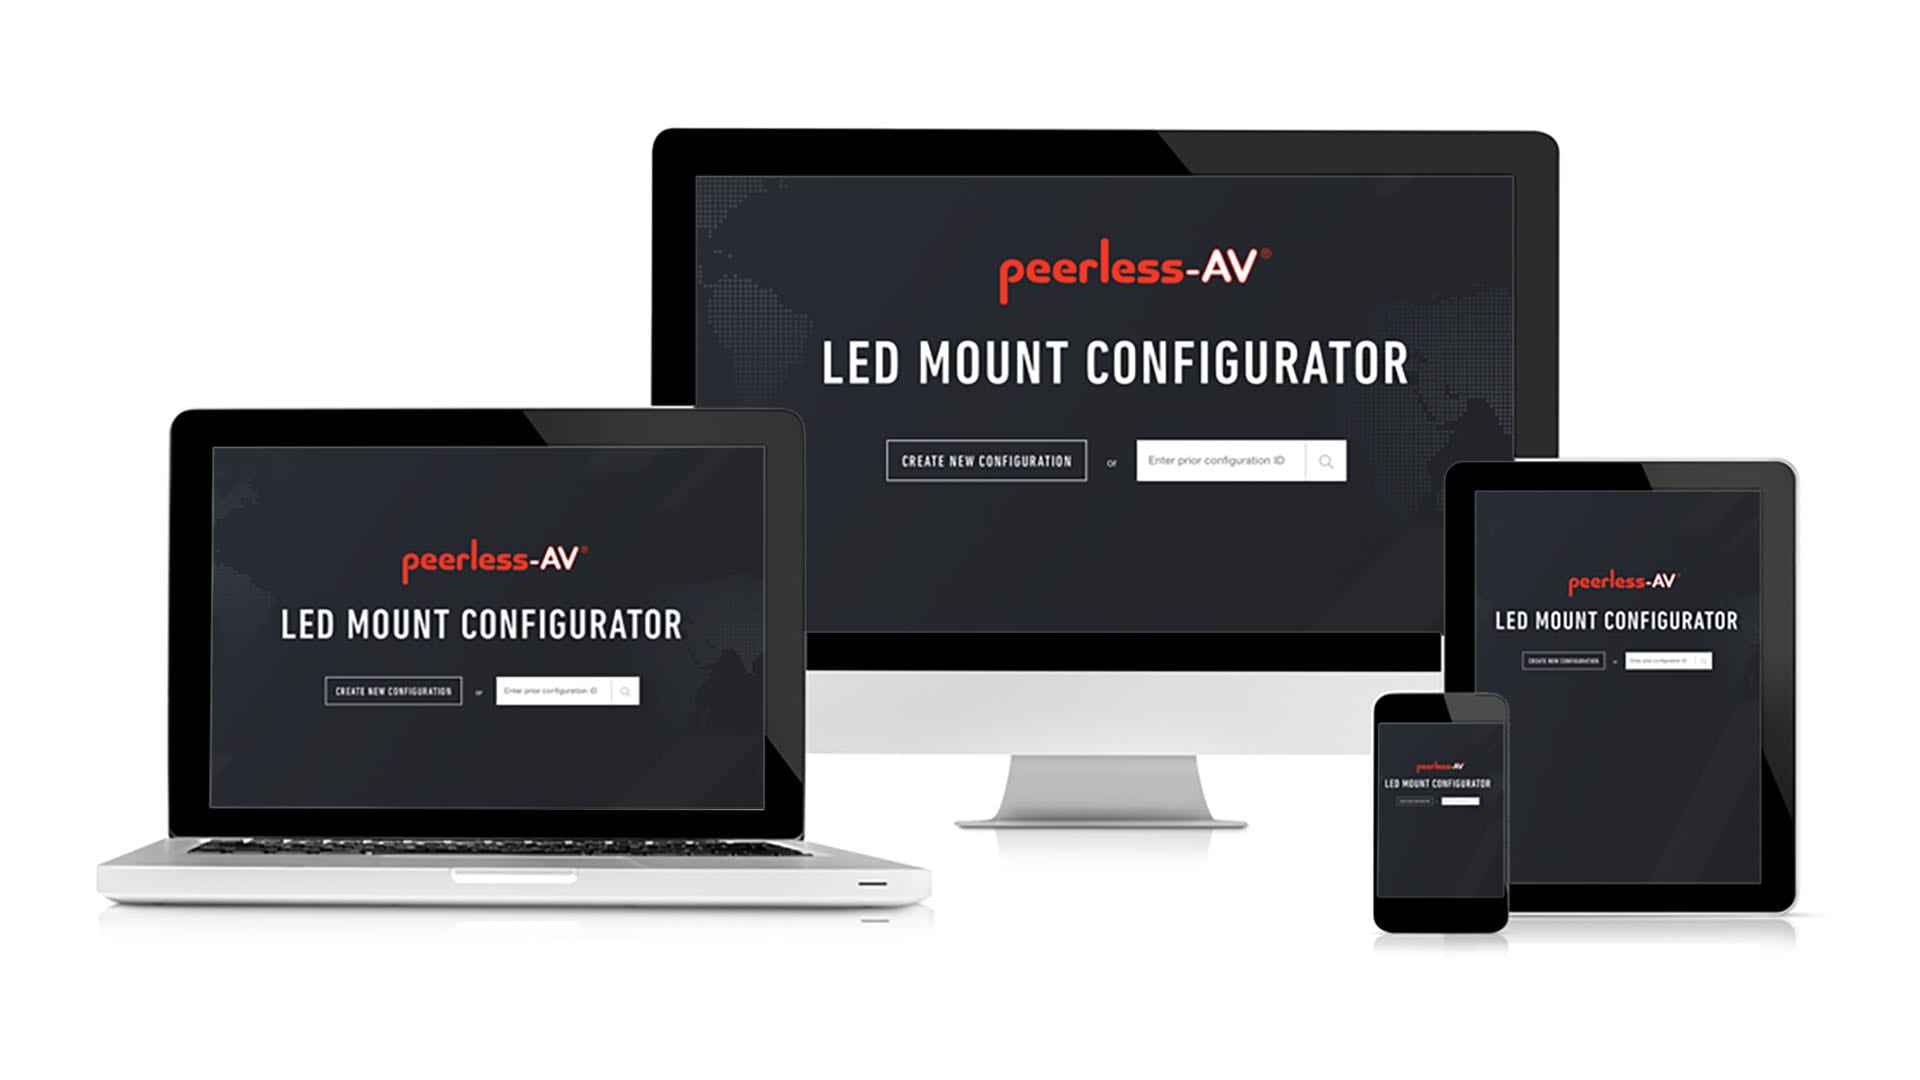 peerless-AV LED Wall Configurator